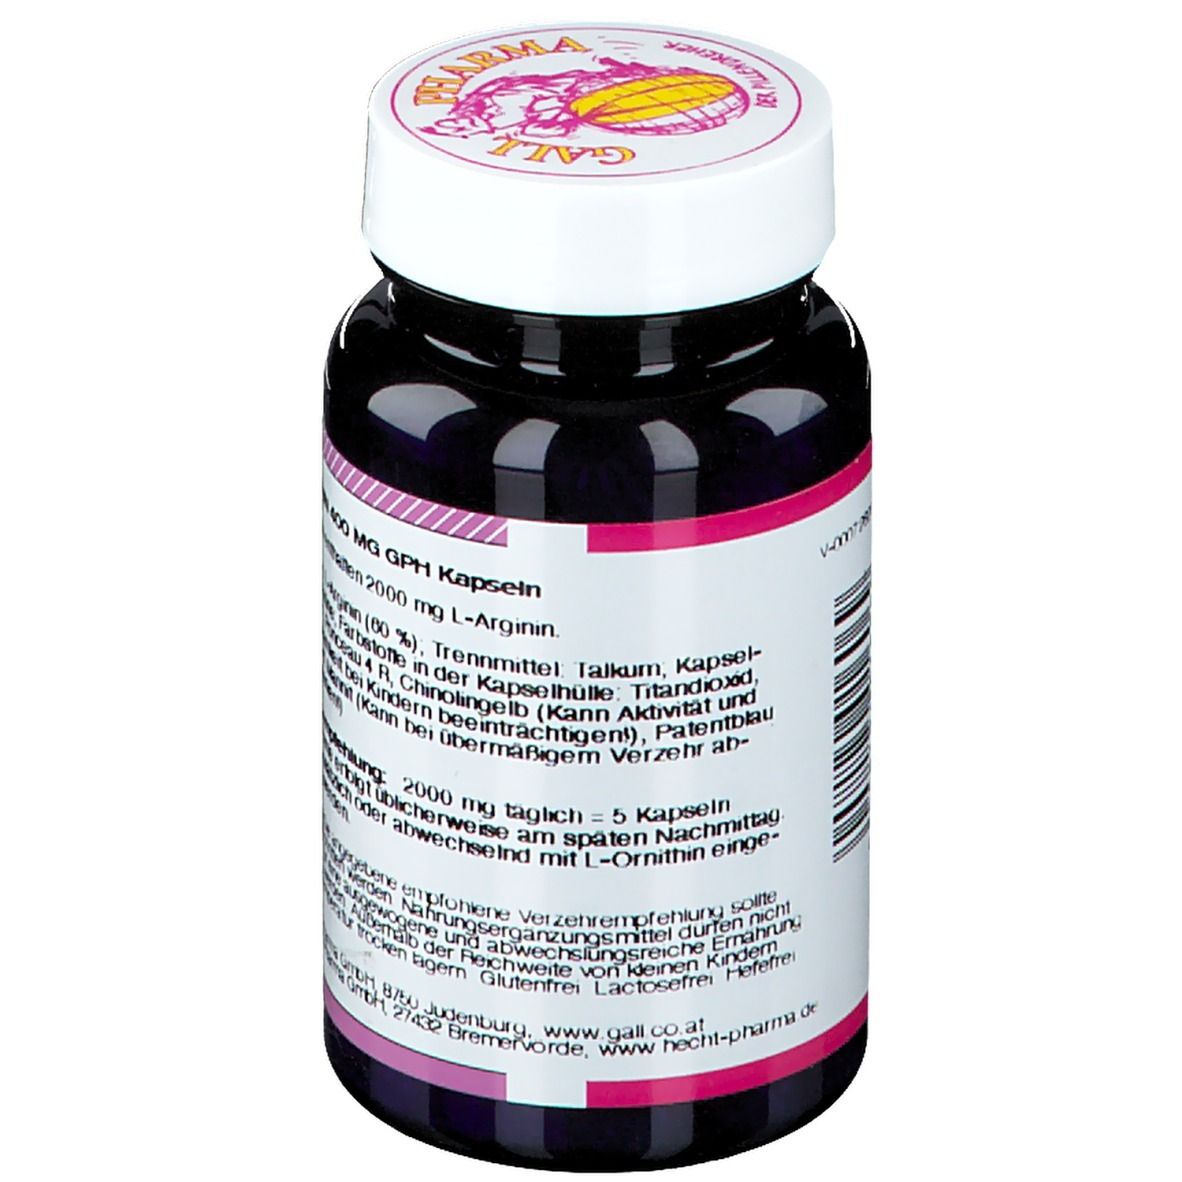 GALL PHARMA L-Arginin 400 mg